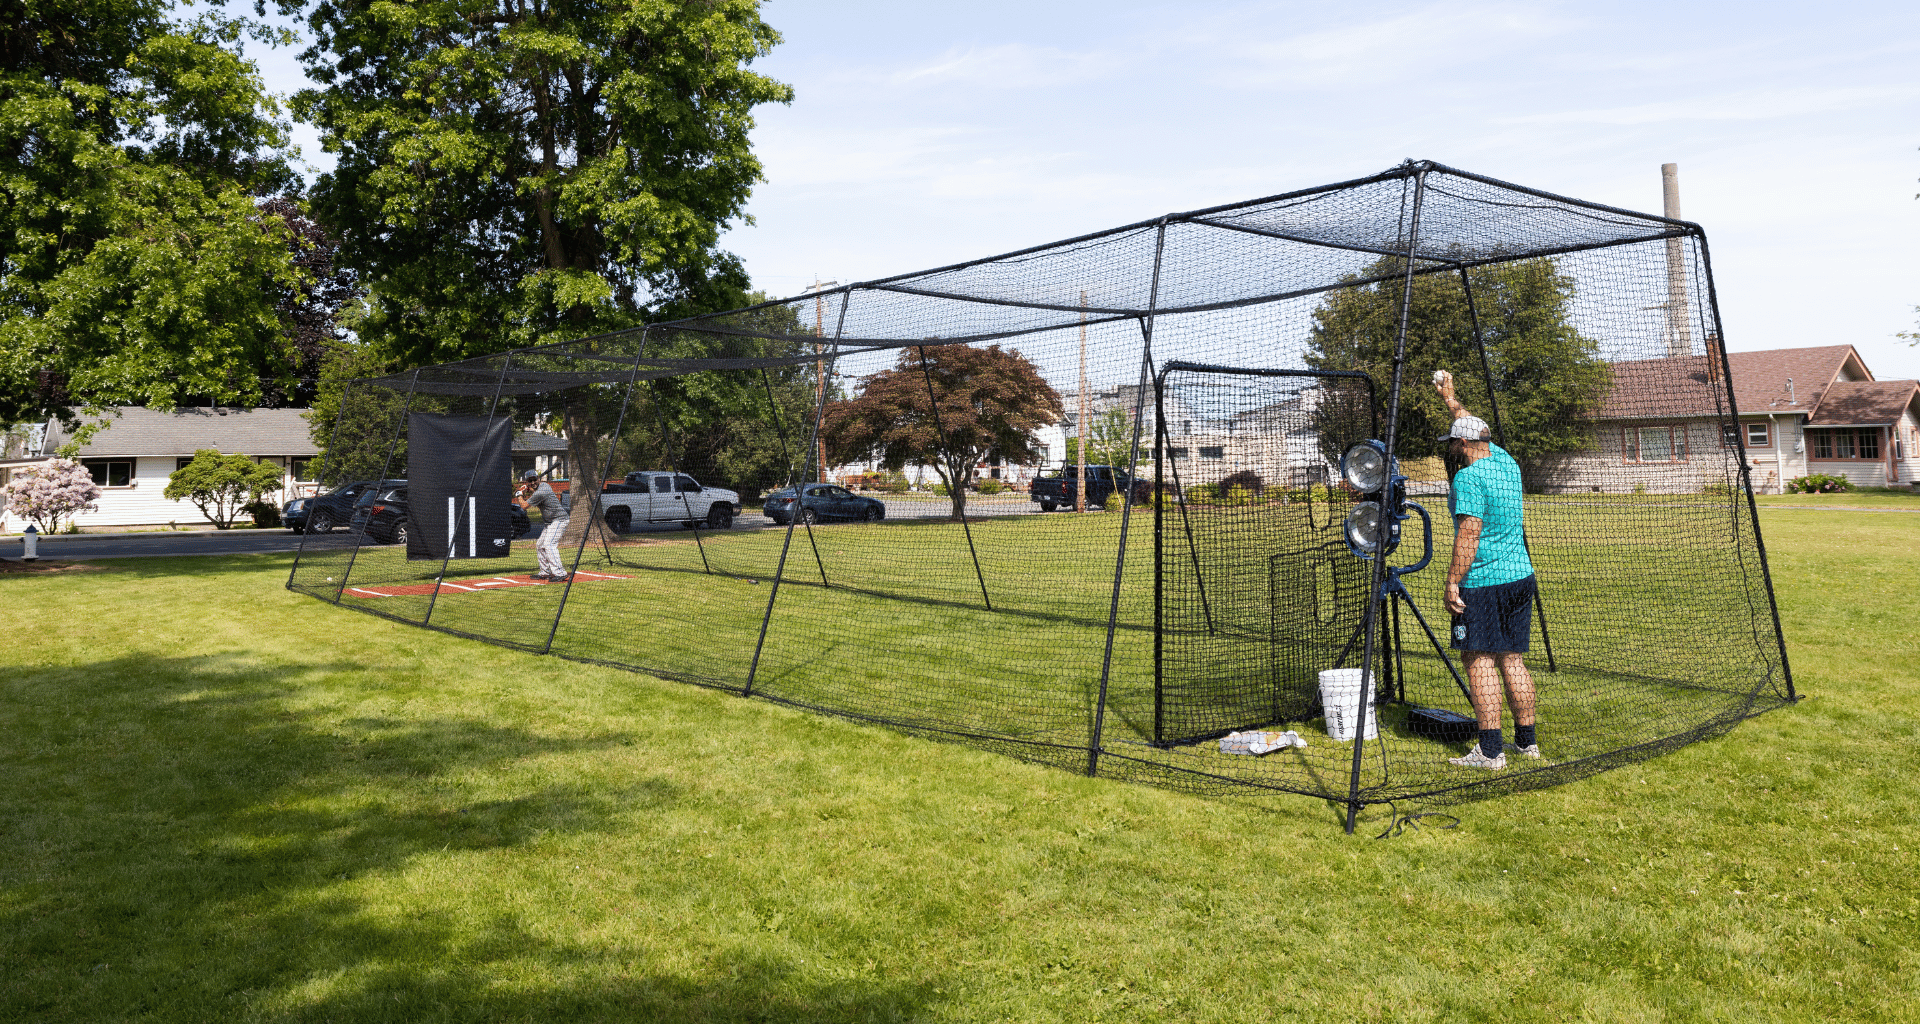 Trapezoid Batting Cage: The Affordable Backyard Powerhouse